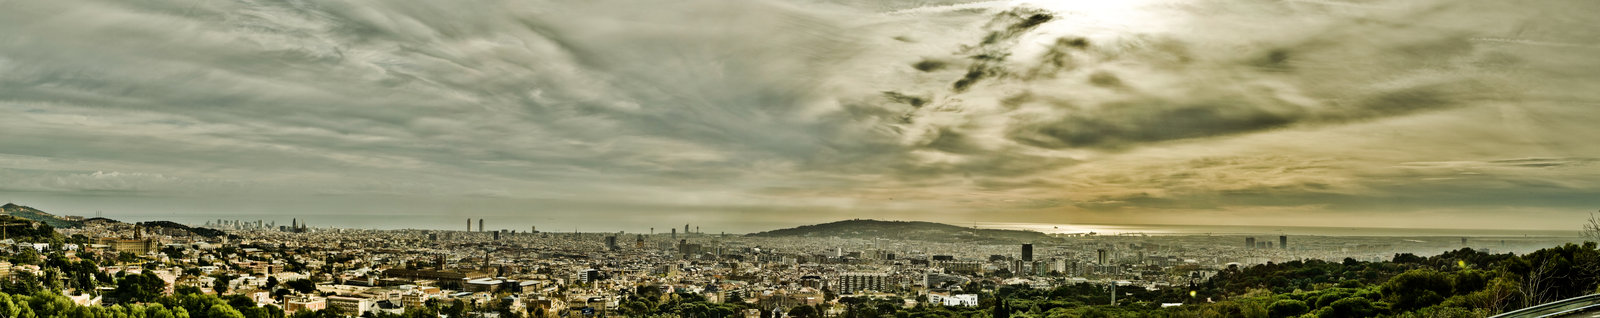 barcelona panorama dec2008 by benkodjak